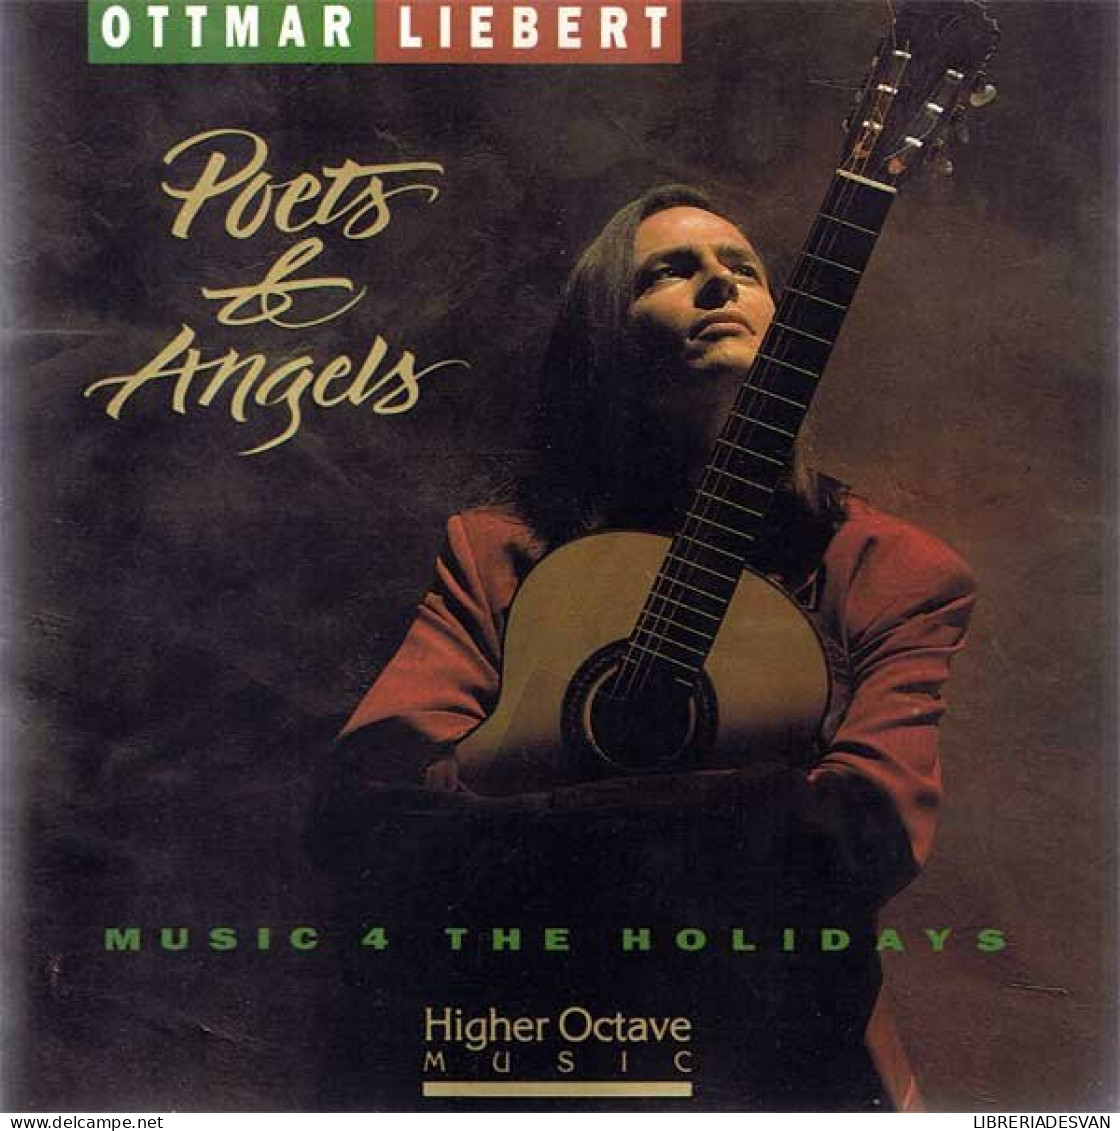 Ottmar Liebert - Poets & Angels. CD - Altri - Musica Spagnola